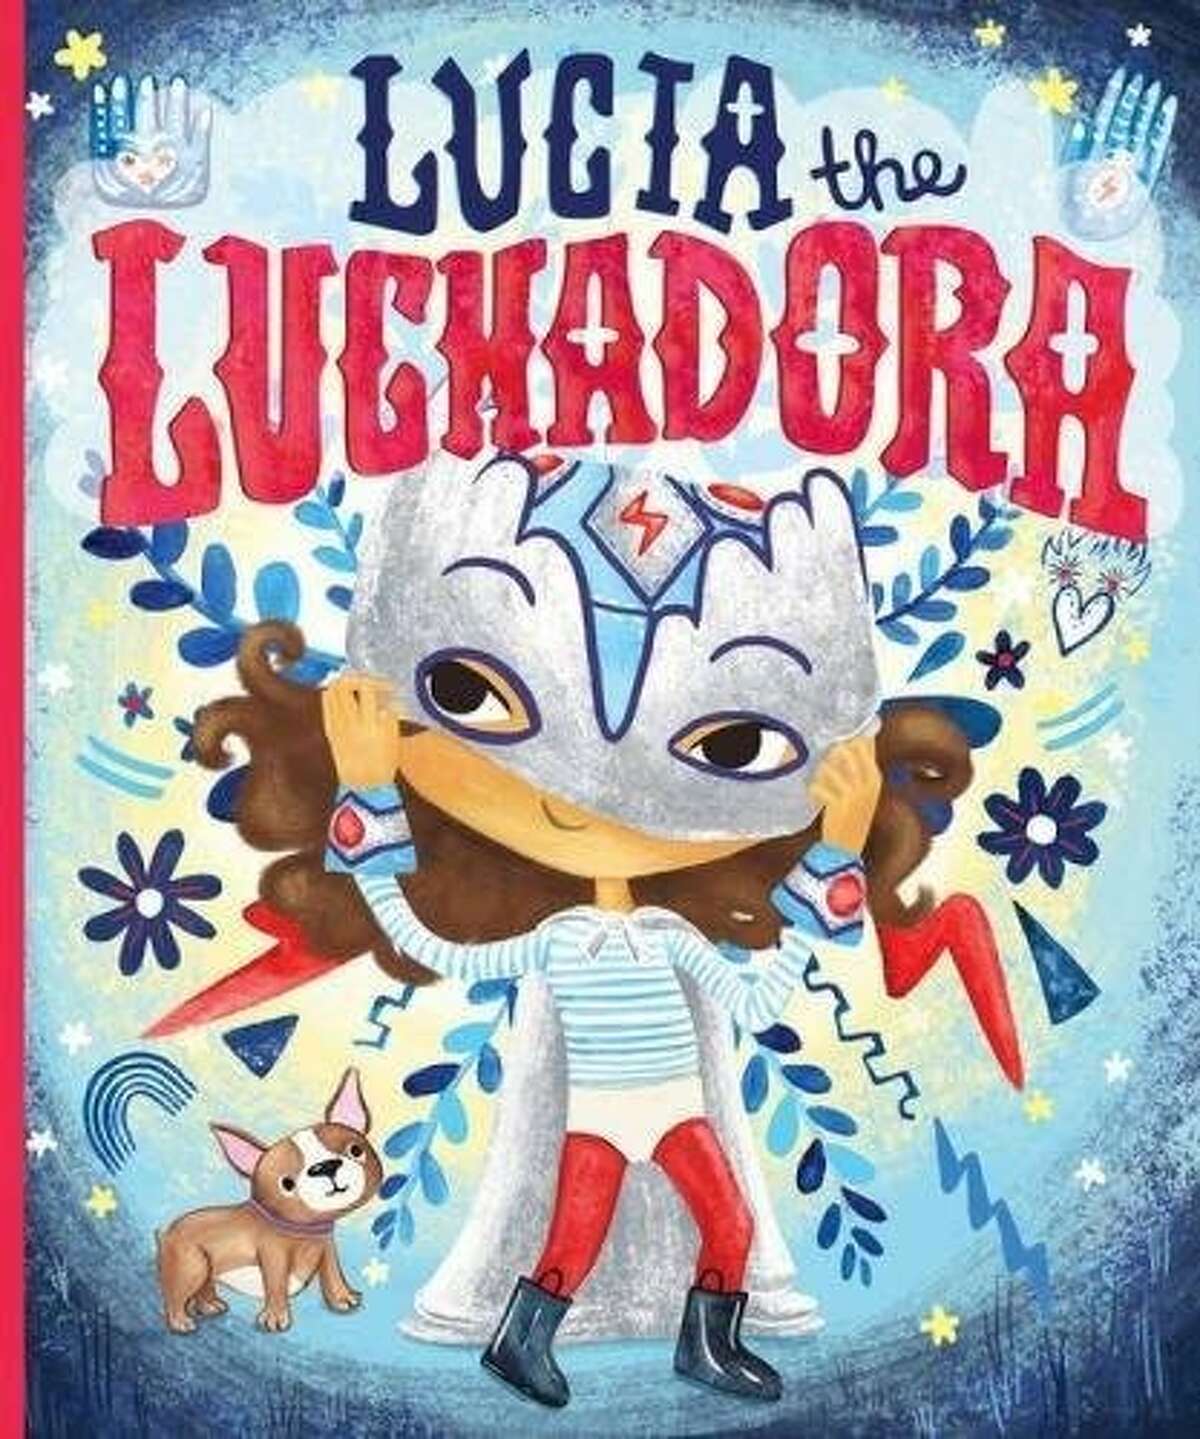 "Lucia the Luchadora" by Cynthia Leonor Garza